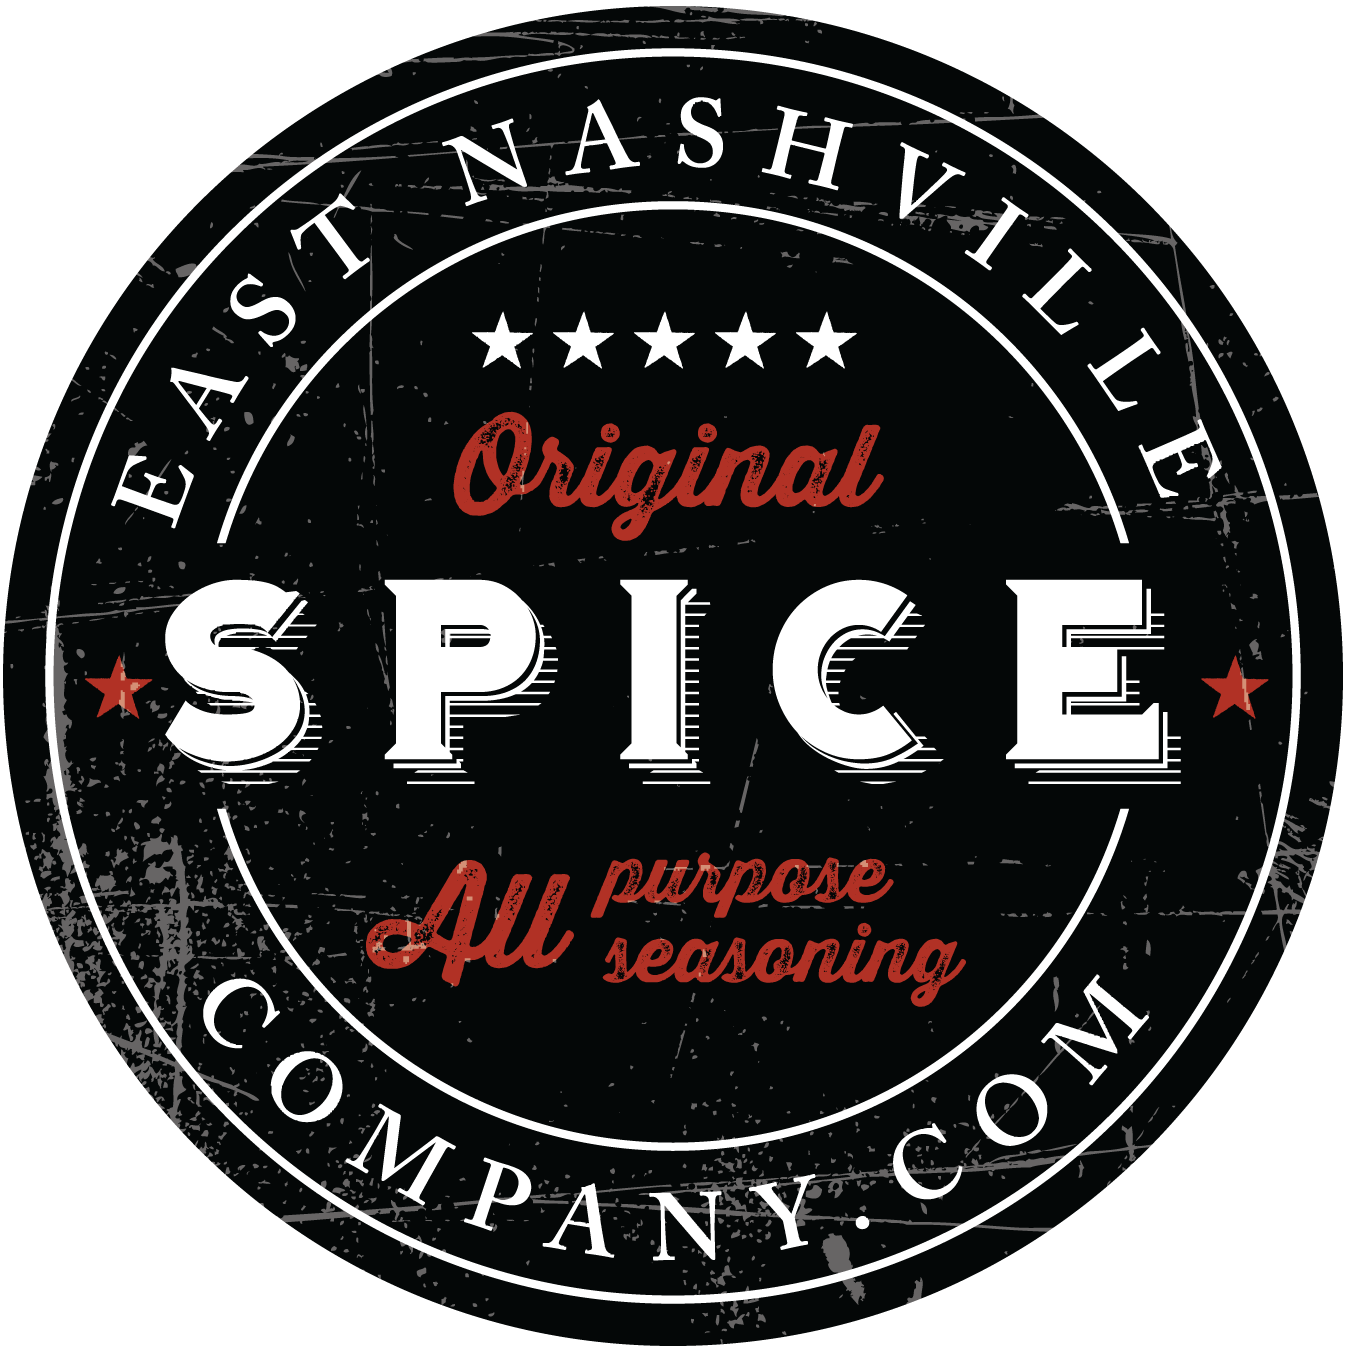 East Nashville Spice Company